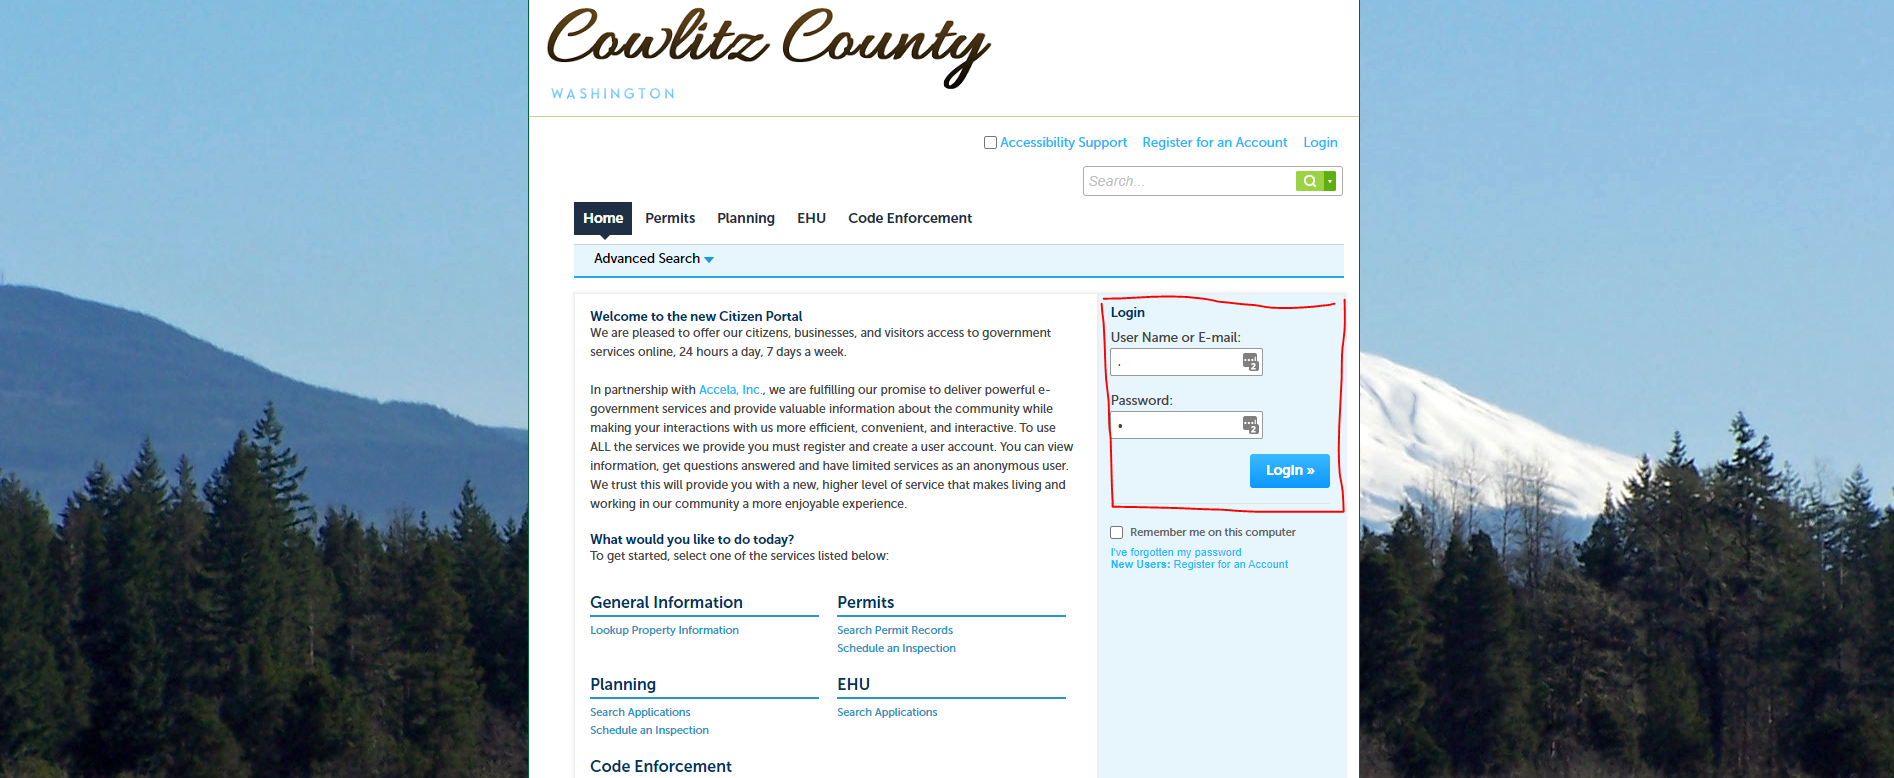 cowlitz county application